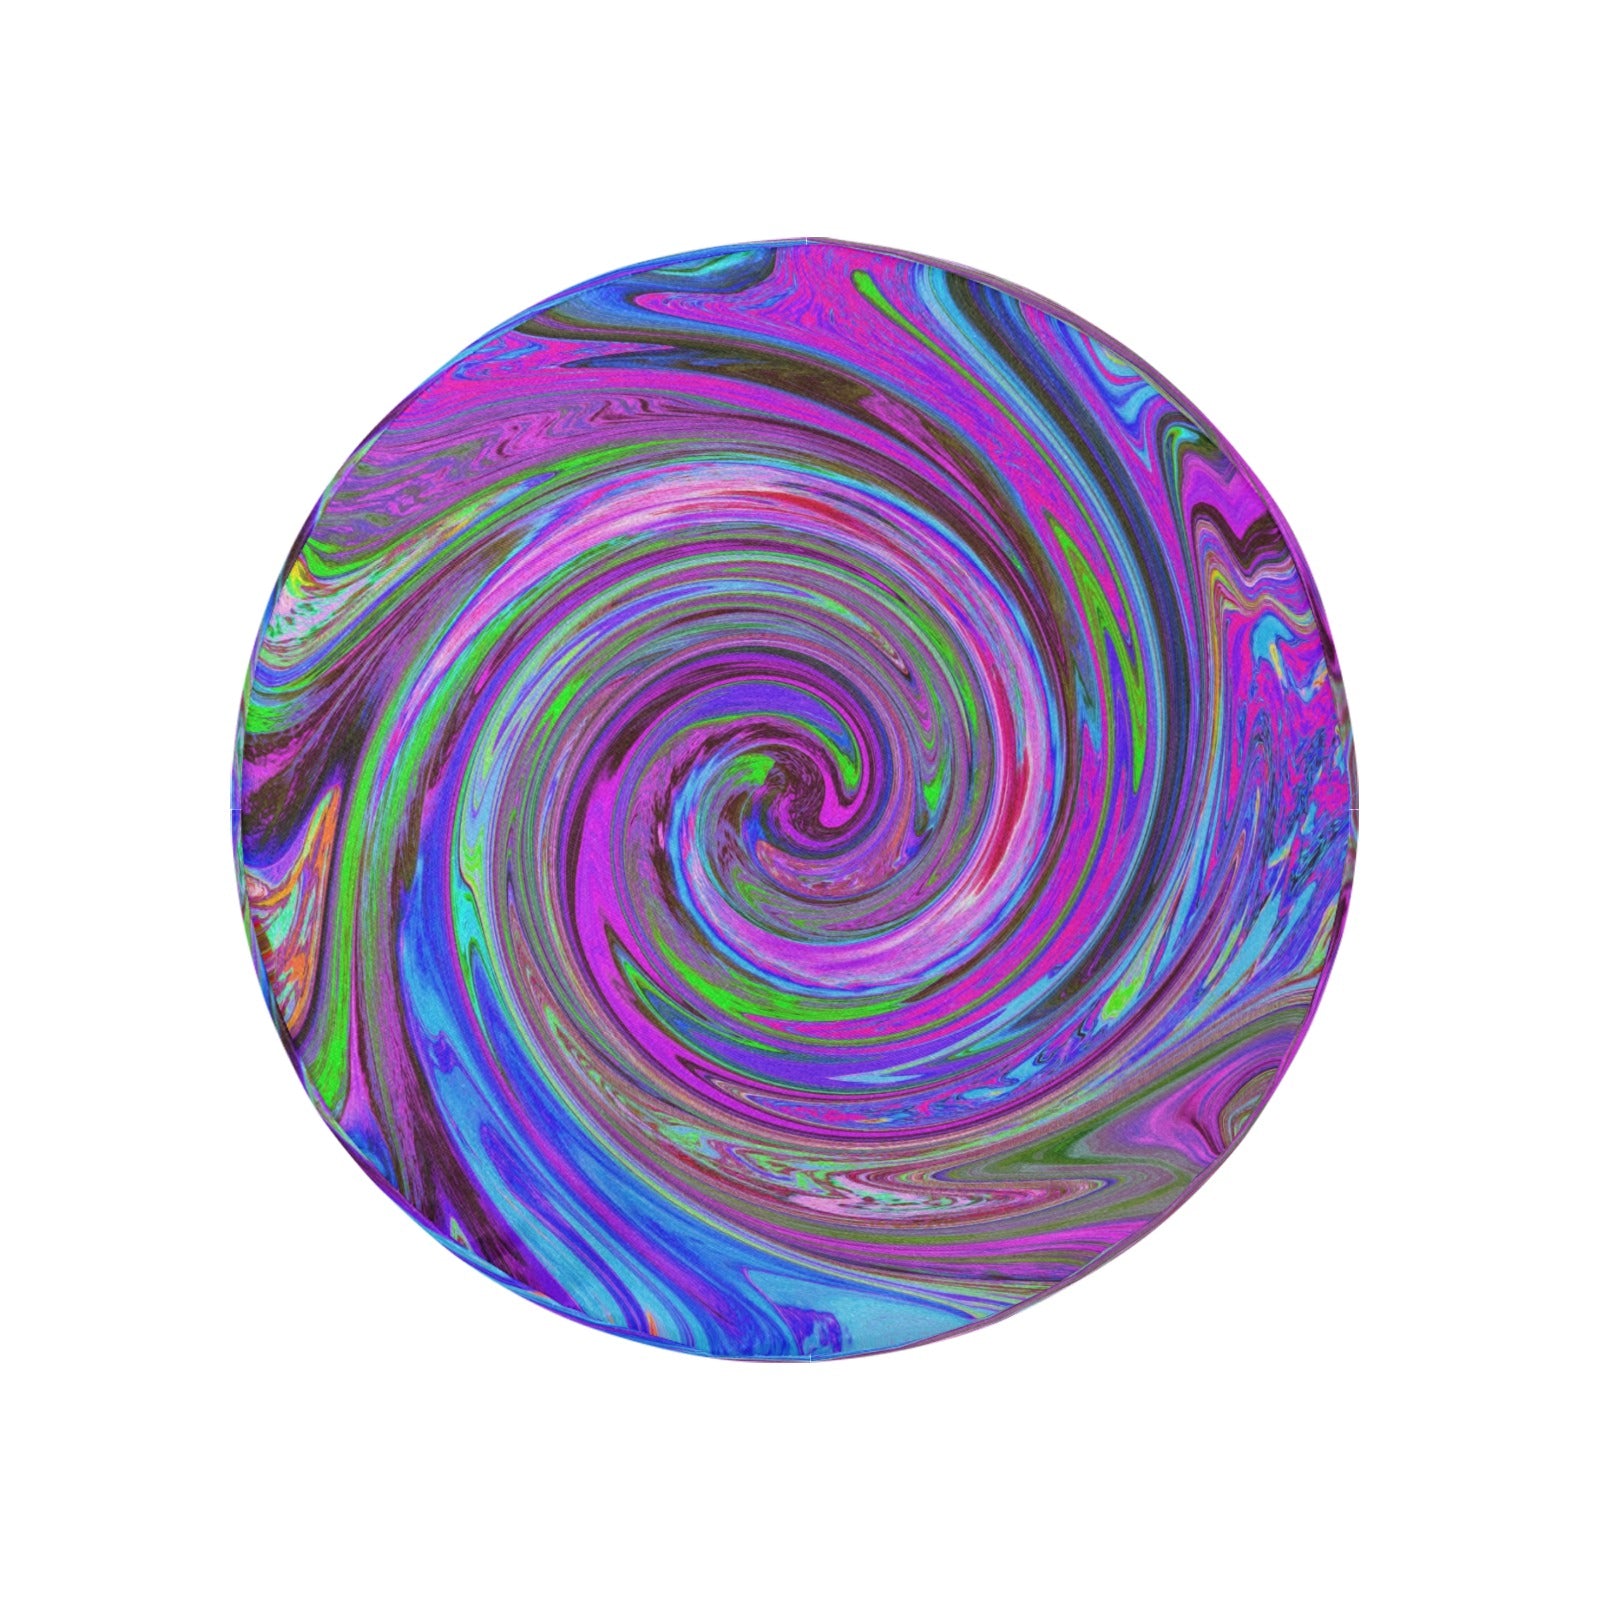 Spare Tire Covers, Colorful Magenta Swirl Retro Abstract Design - Medium